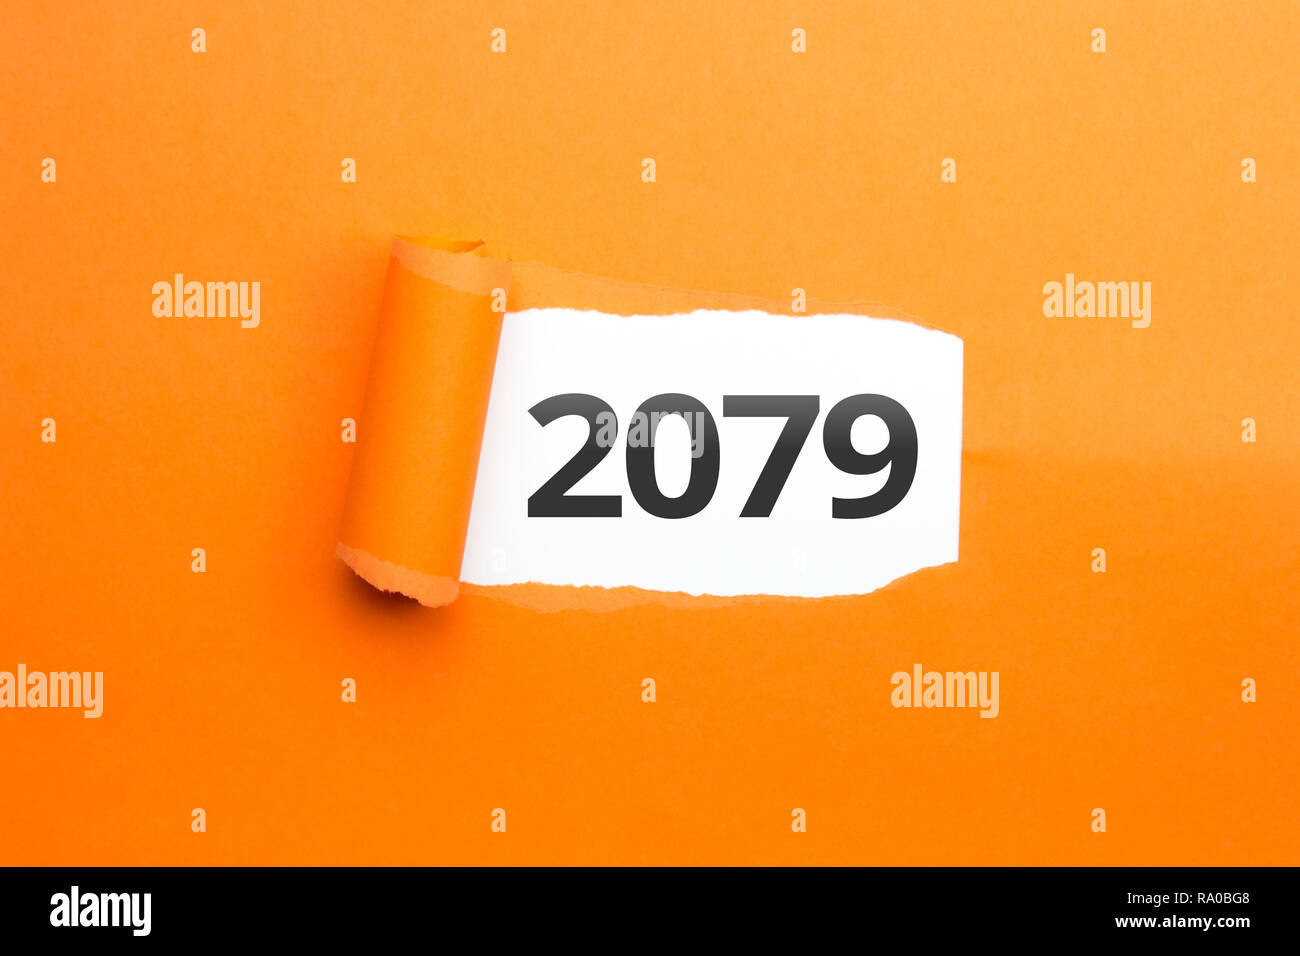 surprising Number / Year 2079 orange background Stock Photo